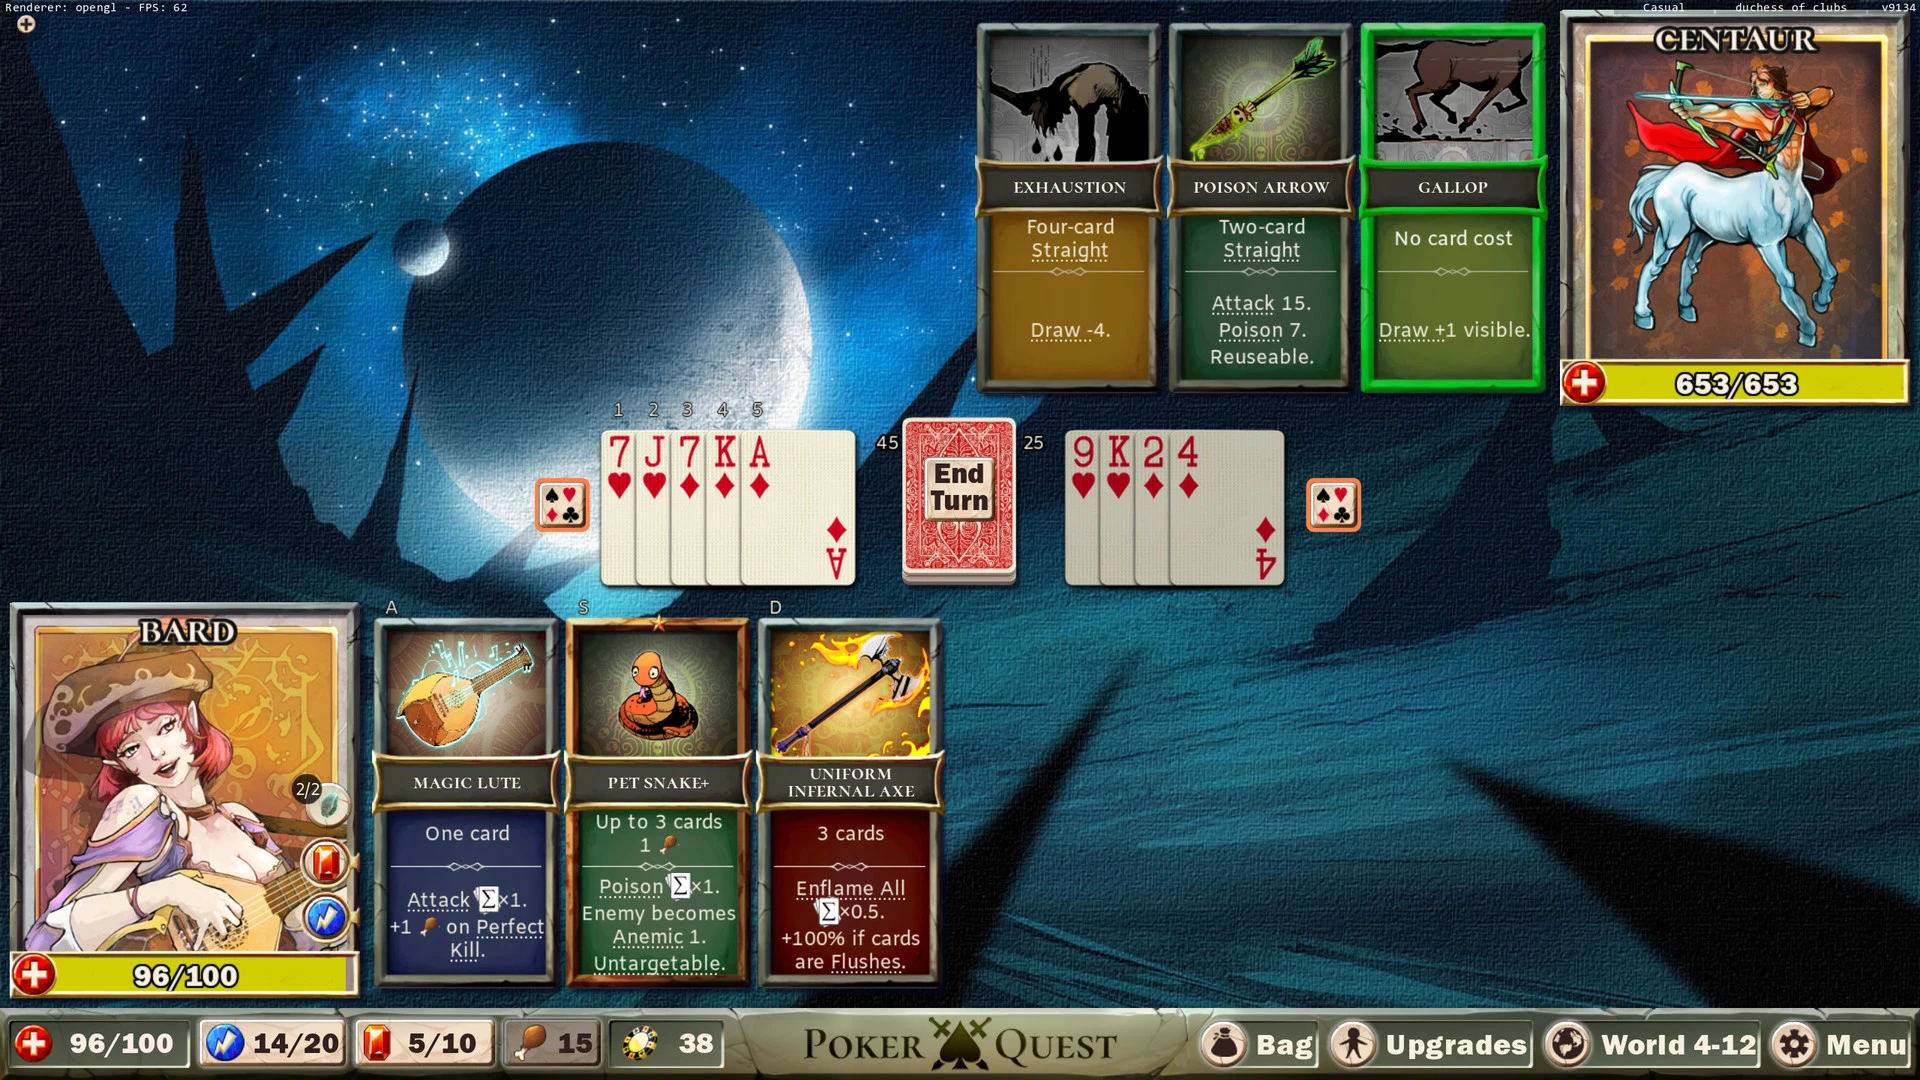 Poker Quest Screenshot of Battle with Bard